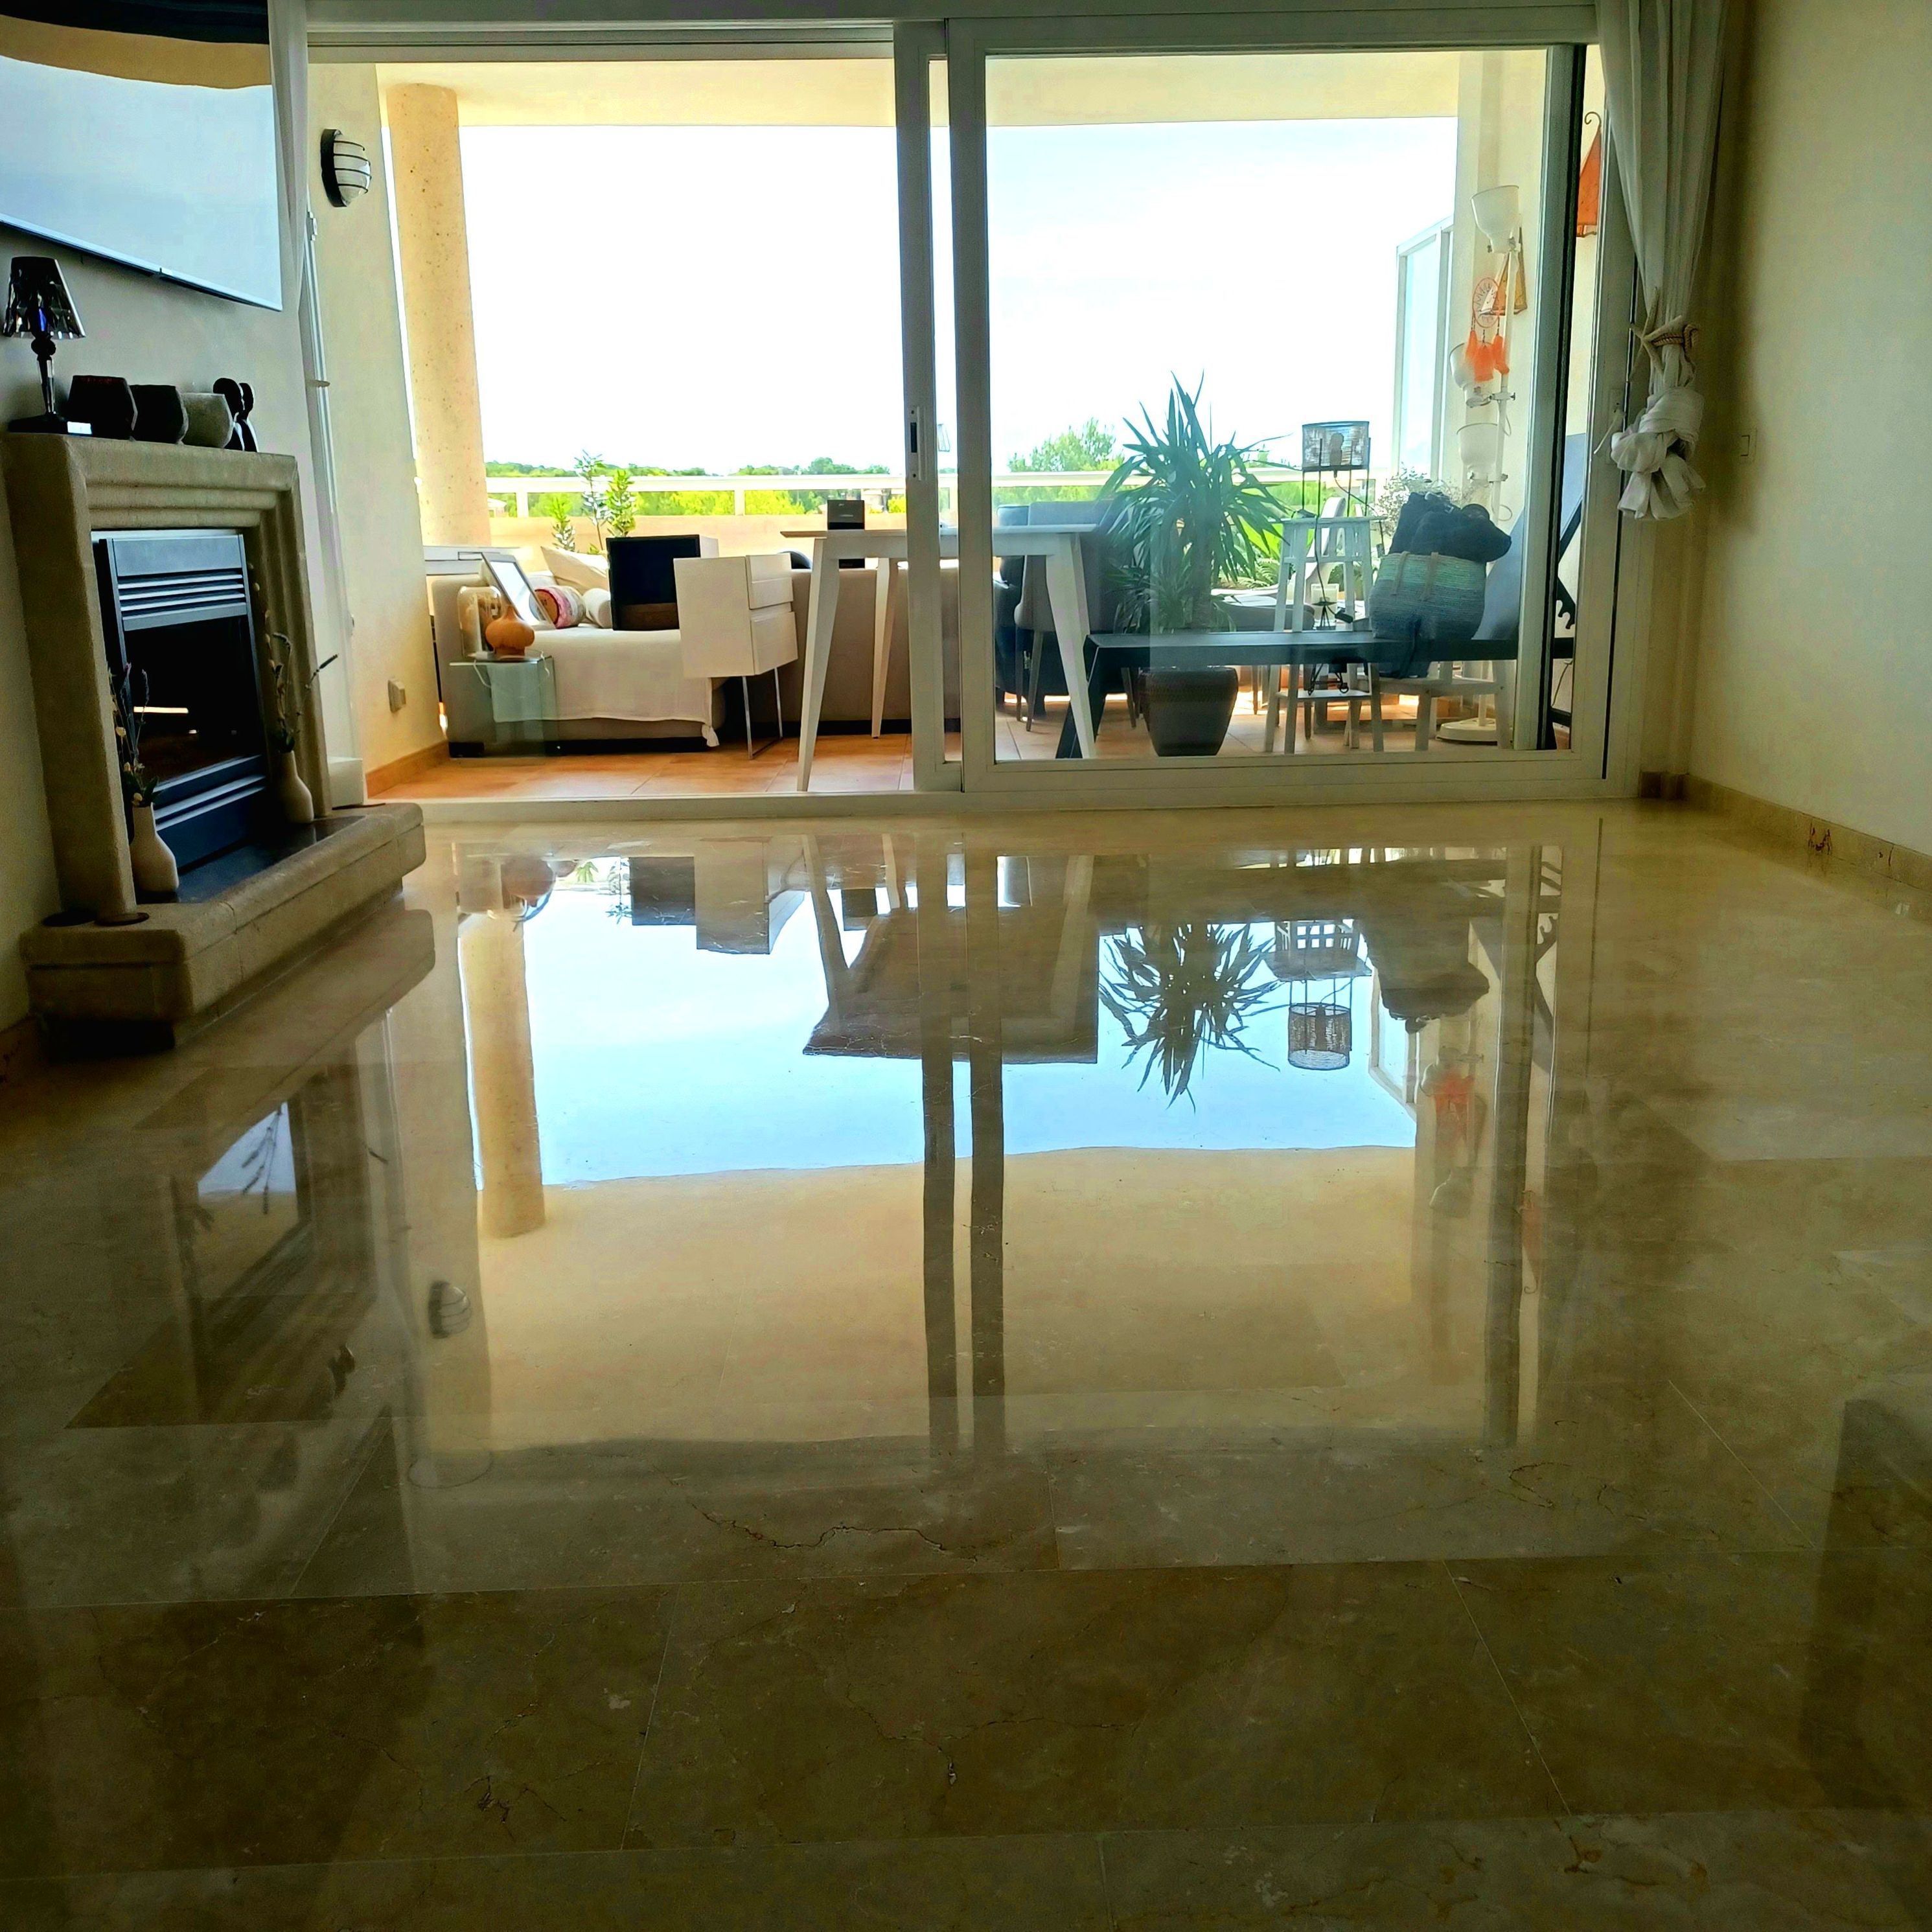 Pulido abrillantado de suelo de marmol marfil. Piso en Maioris. Mallorca. Sanding and polishing marble floor